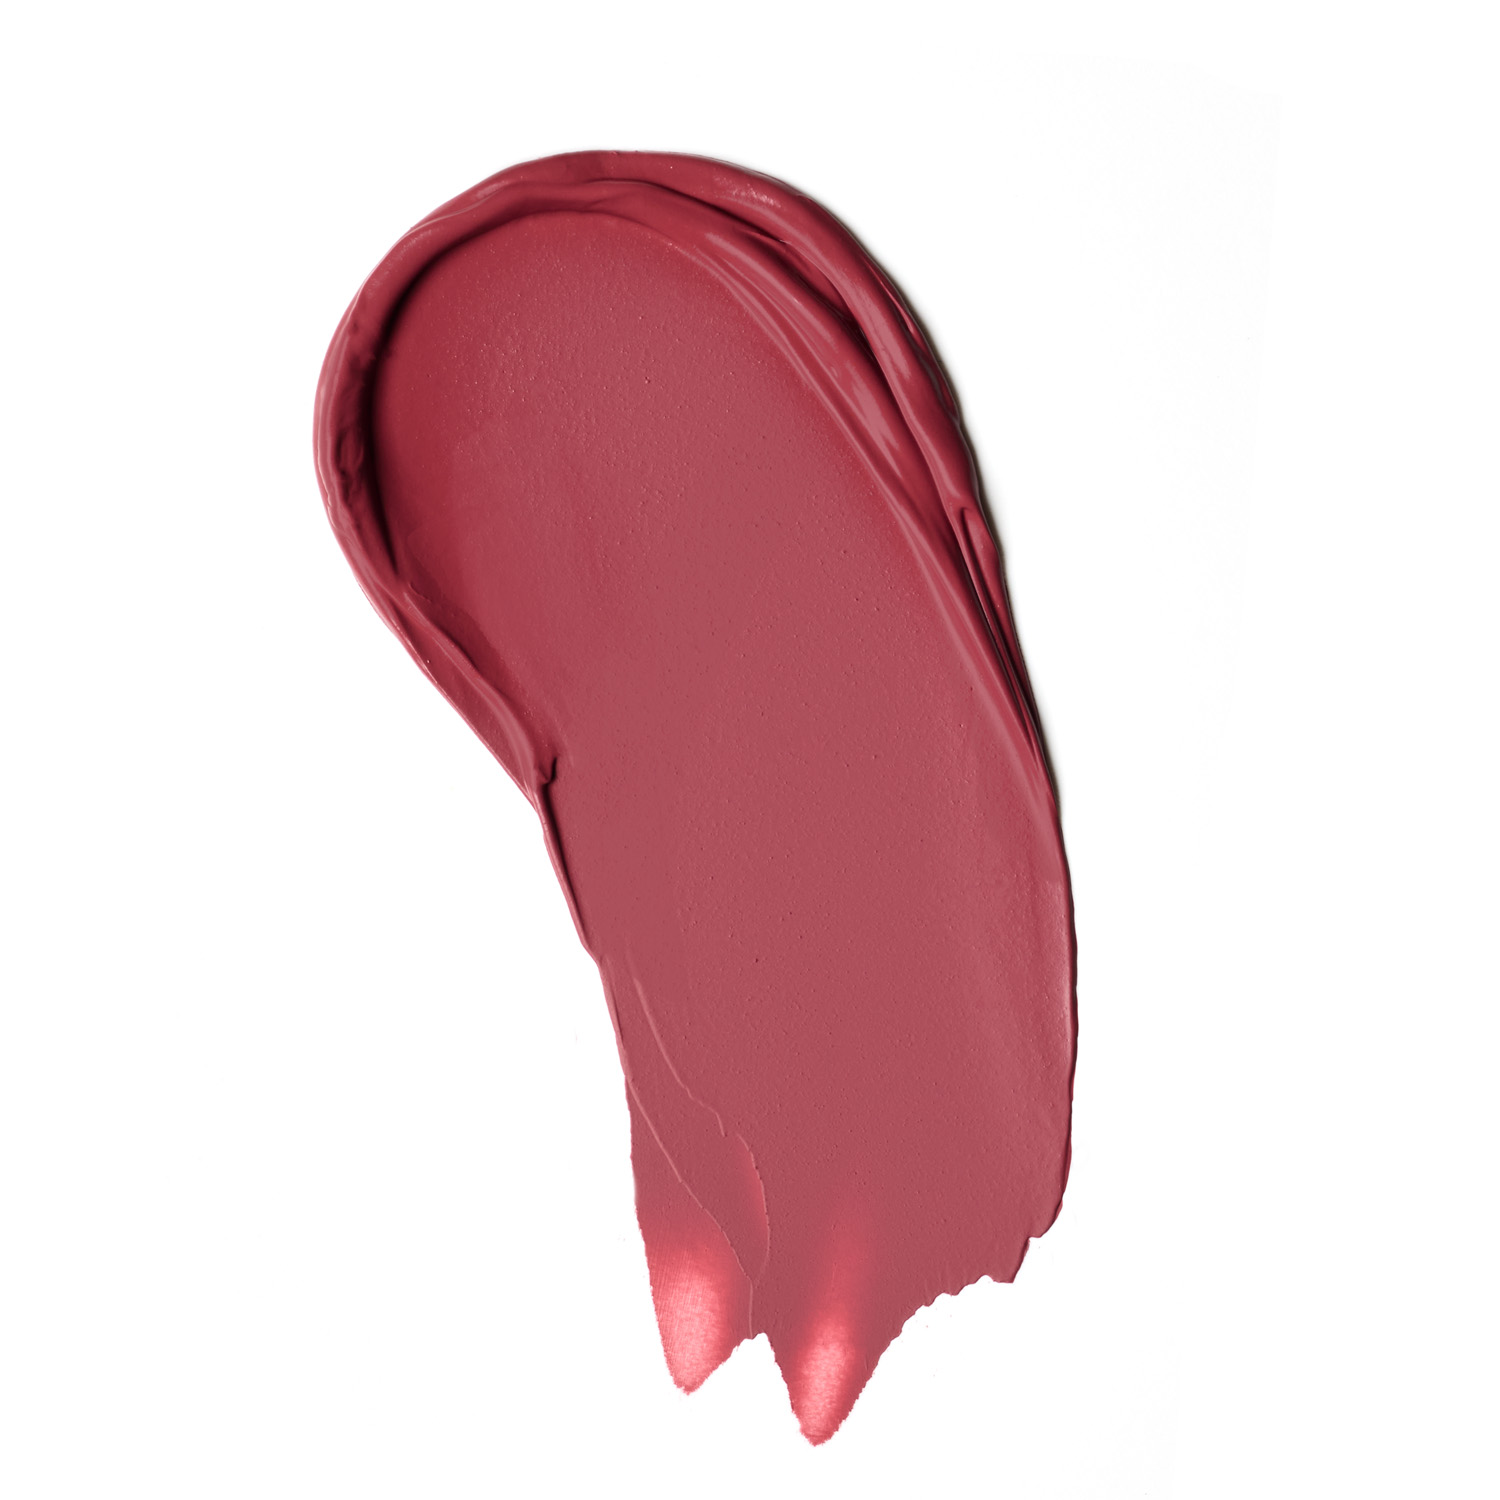 af94 Majorly Matte Liquid Lipstick, Just a Crush, Pink - image 3 of 5